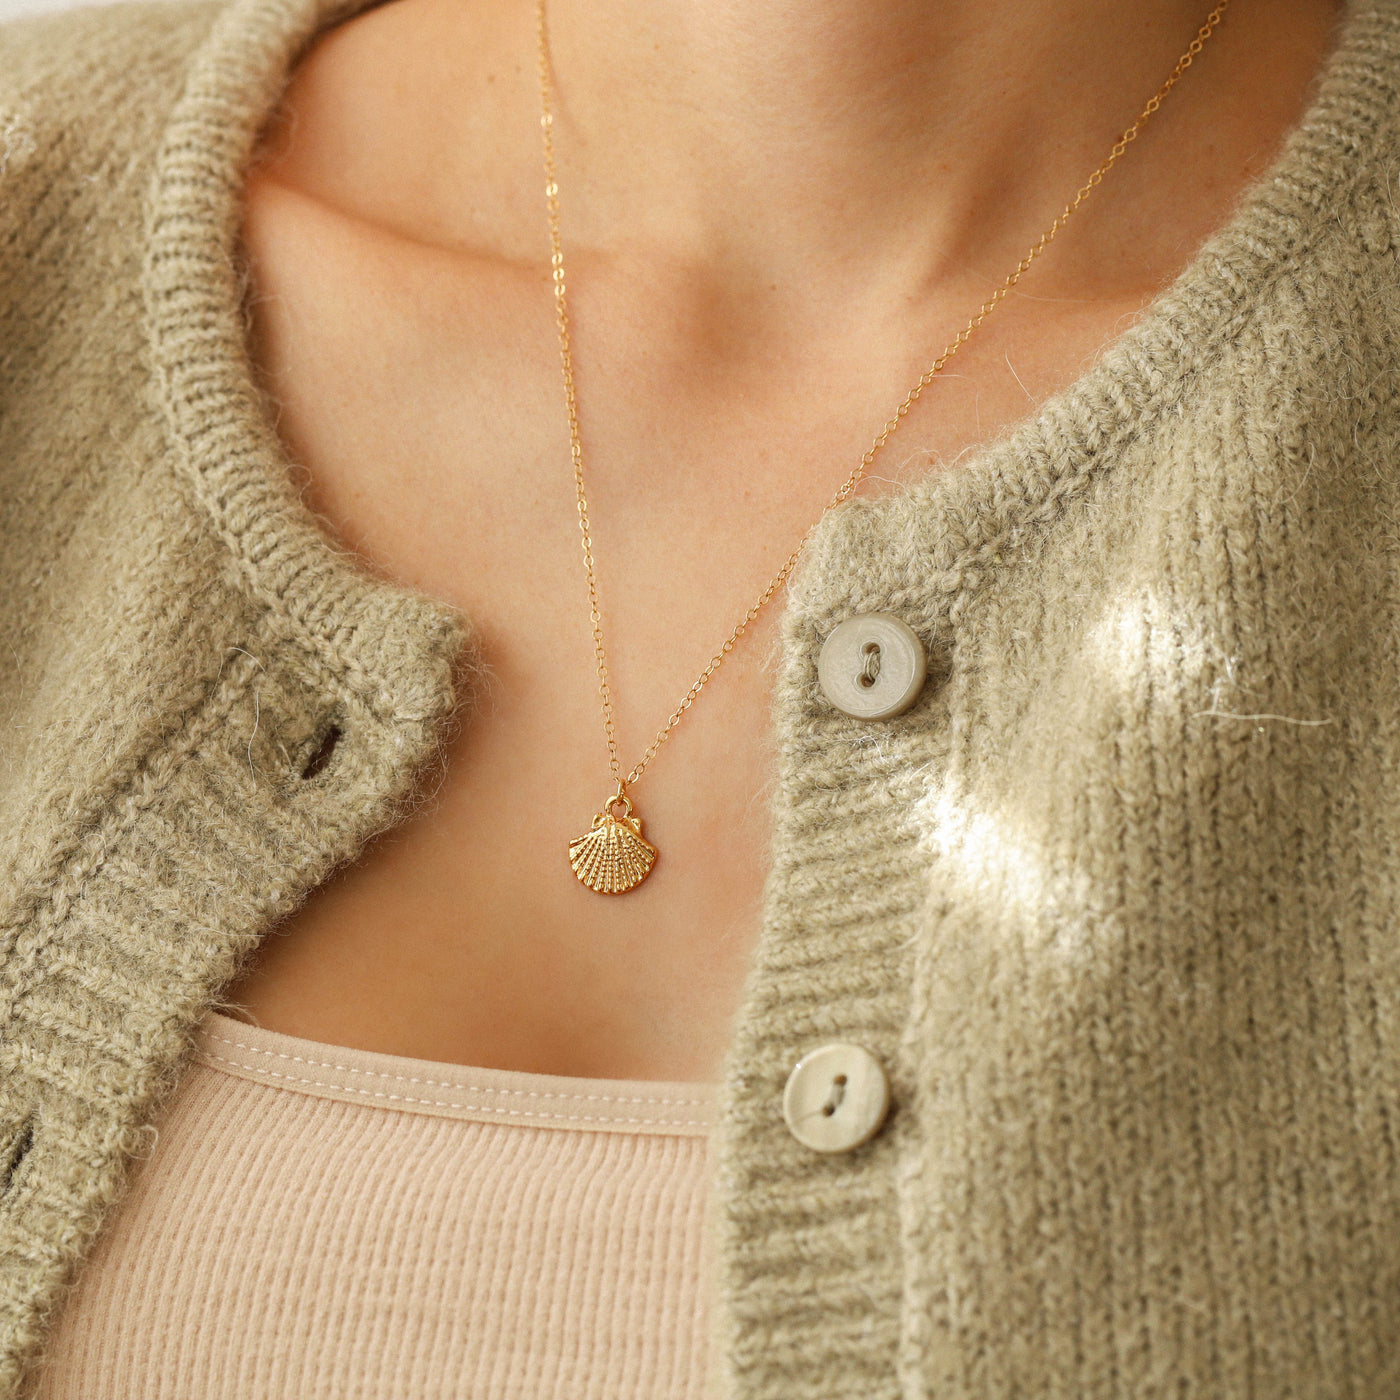 Gold seashell pendant necklace